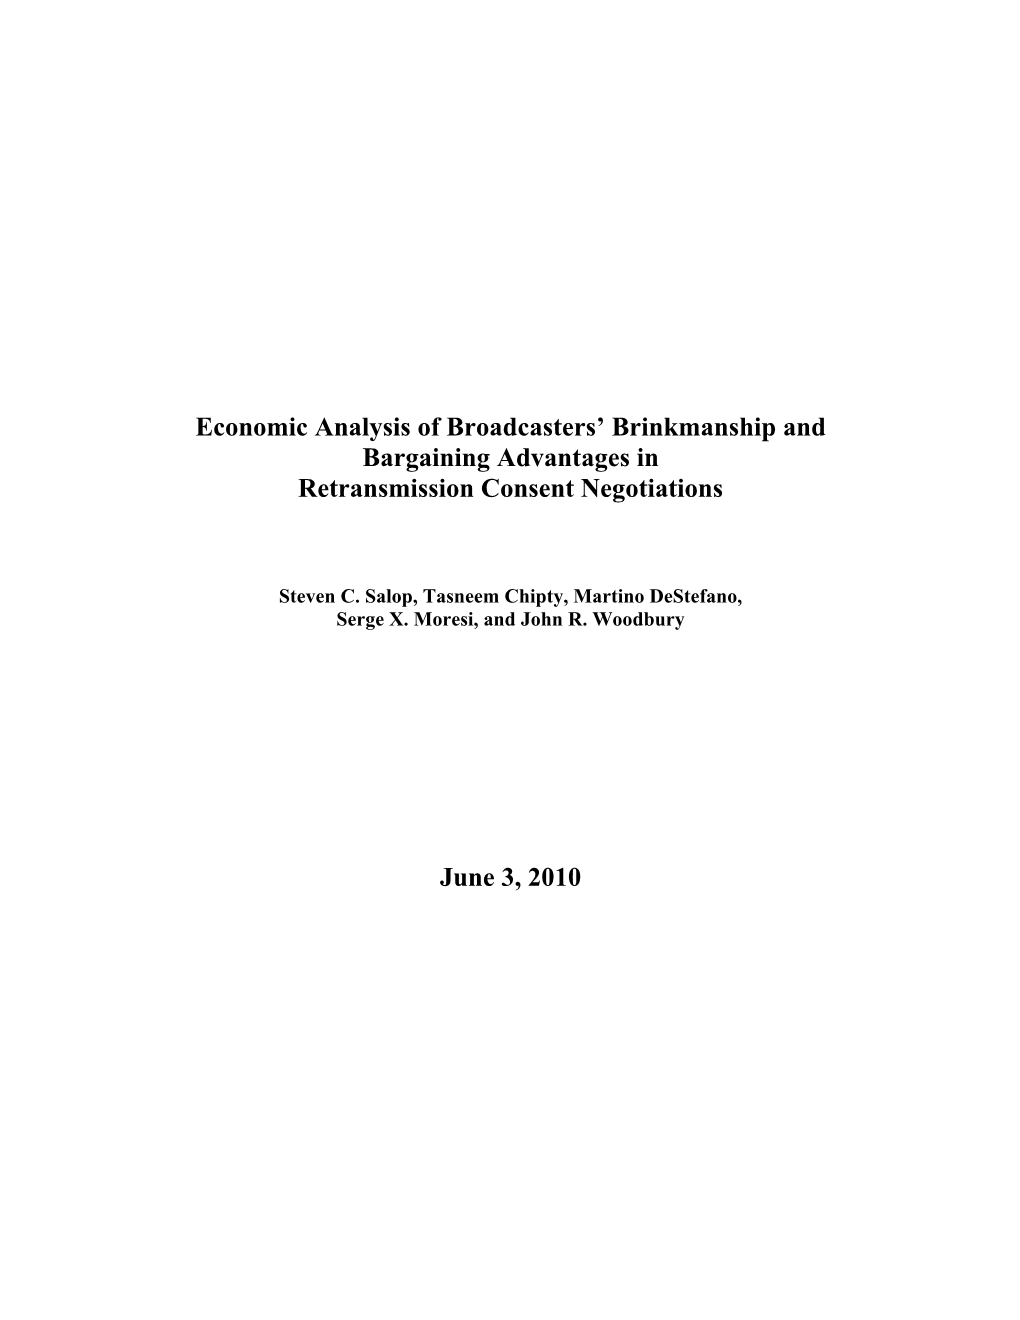 Economic Analysis of Broadcasters' Brinkmanship and Bargaining